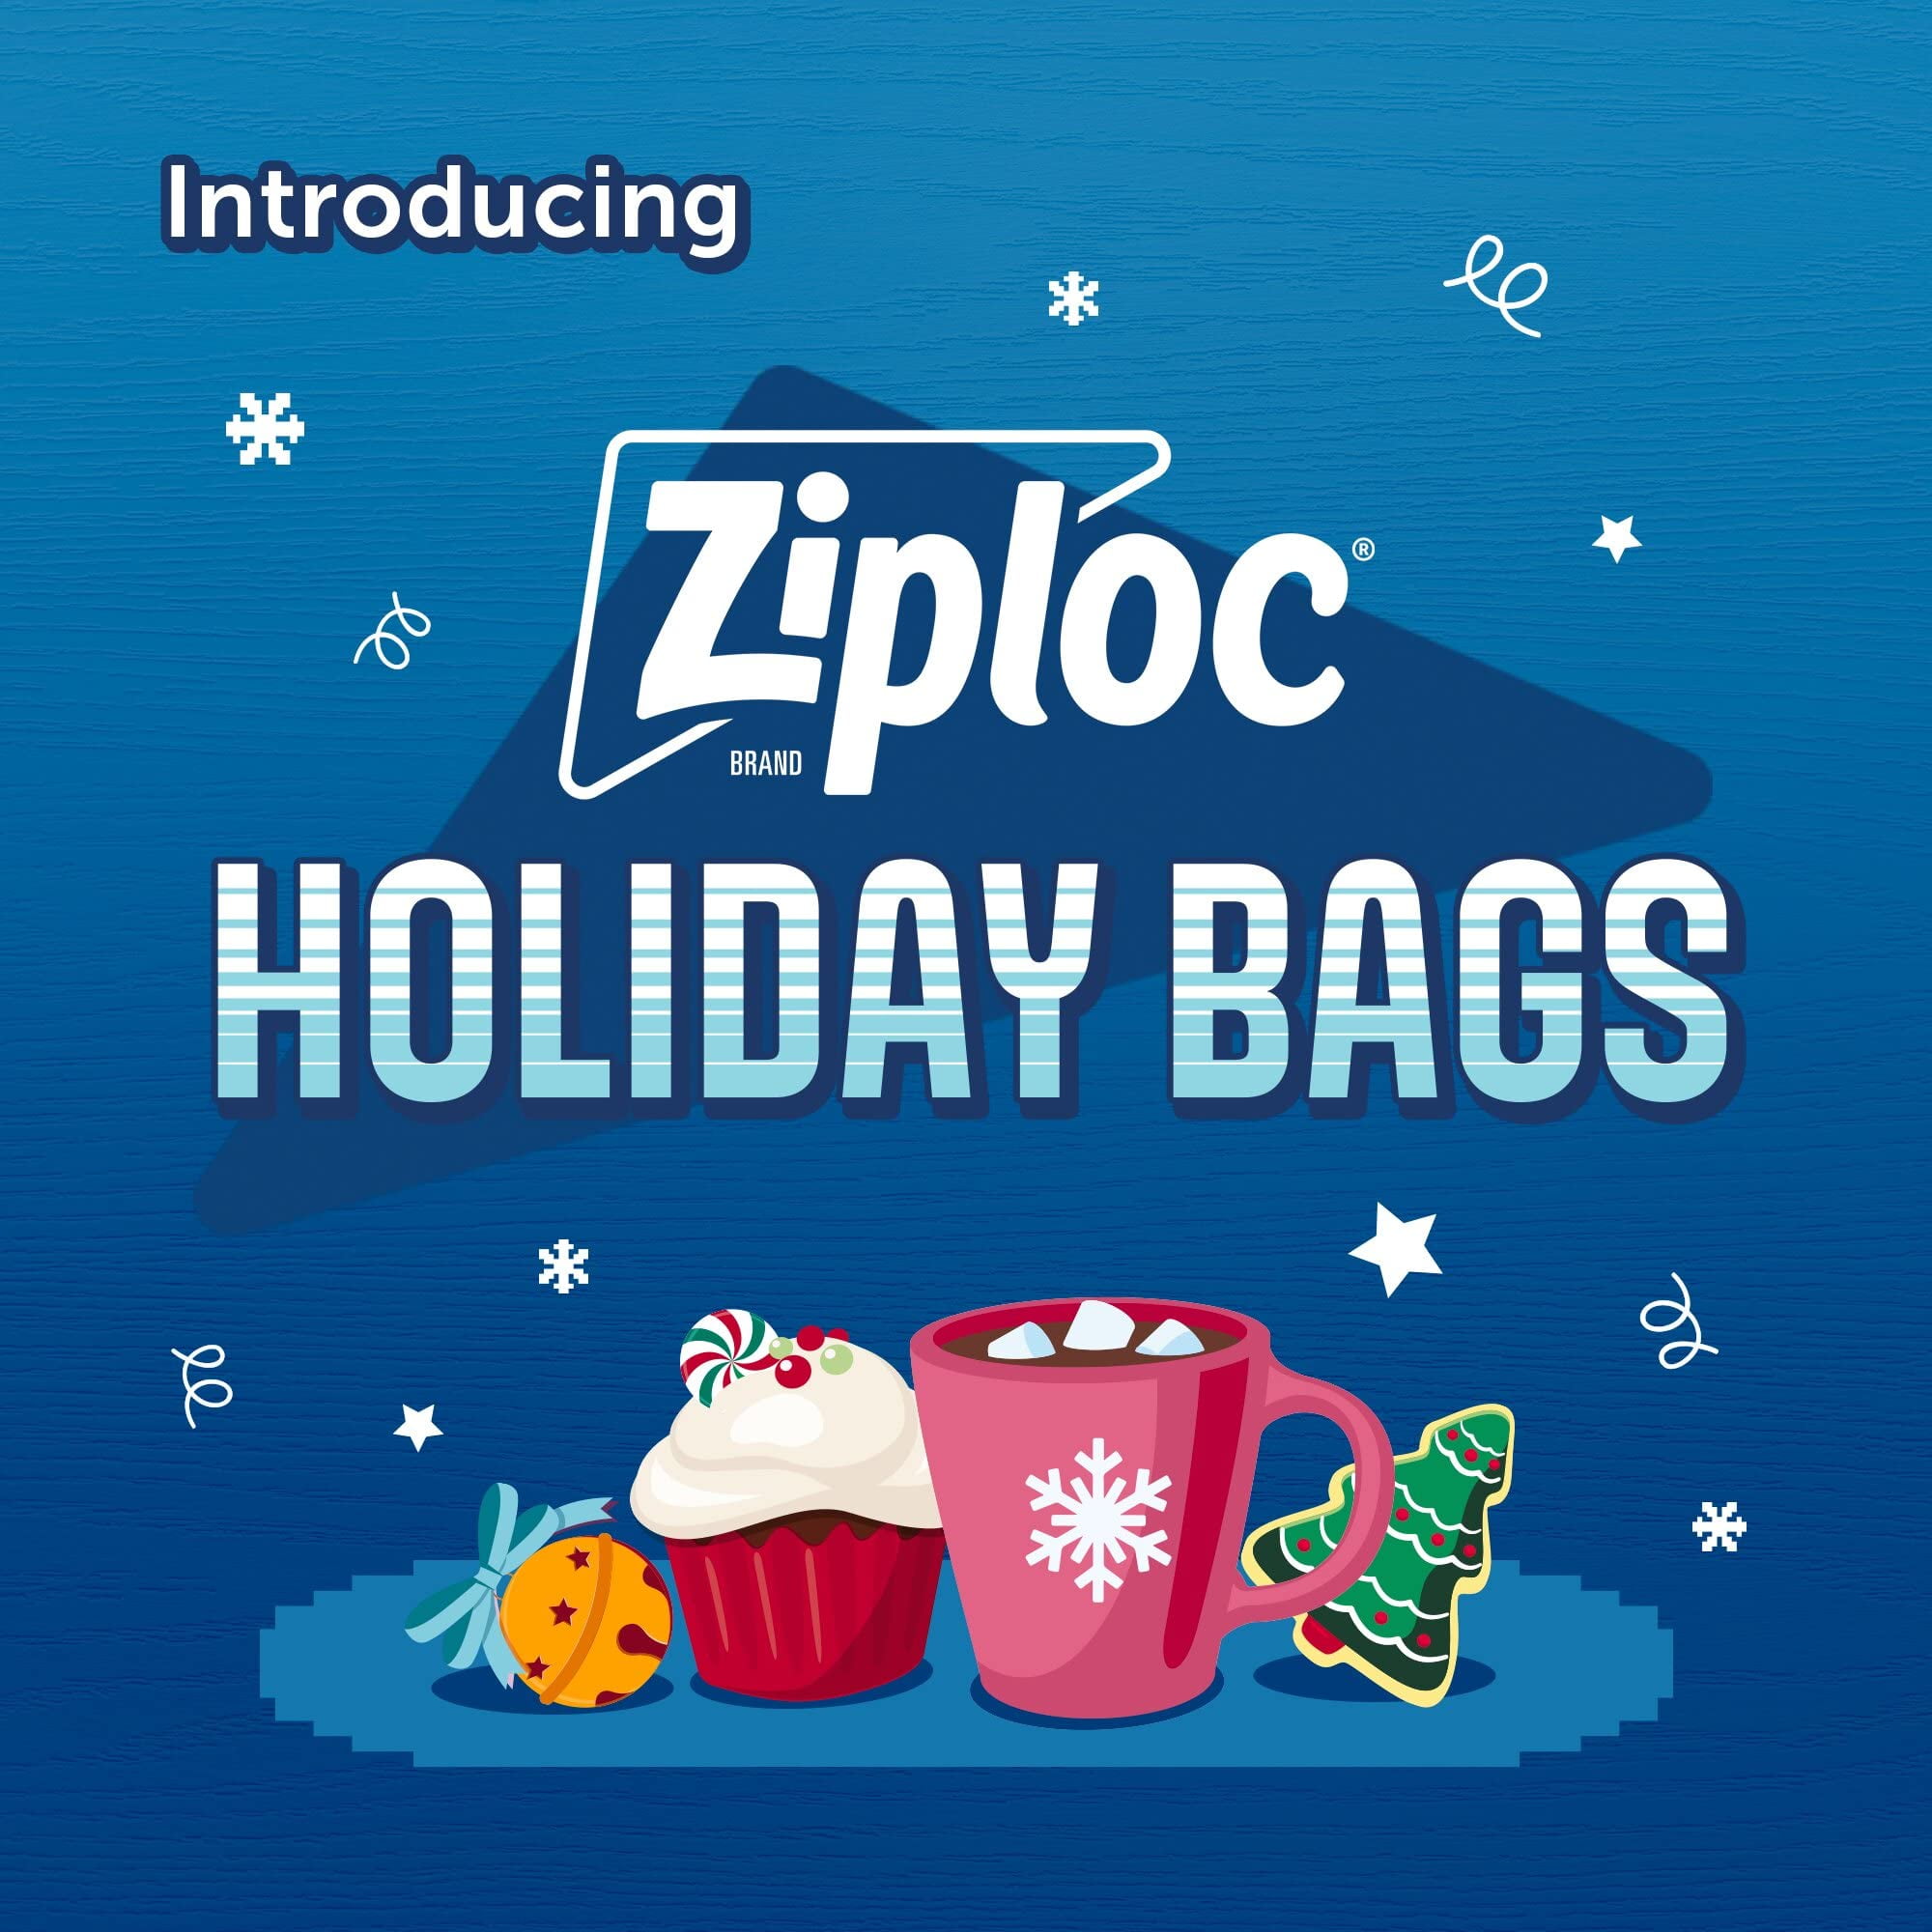 Ziploc Brand Quart Slider Storage Bags with Power Shield